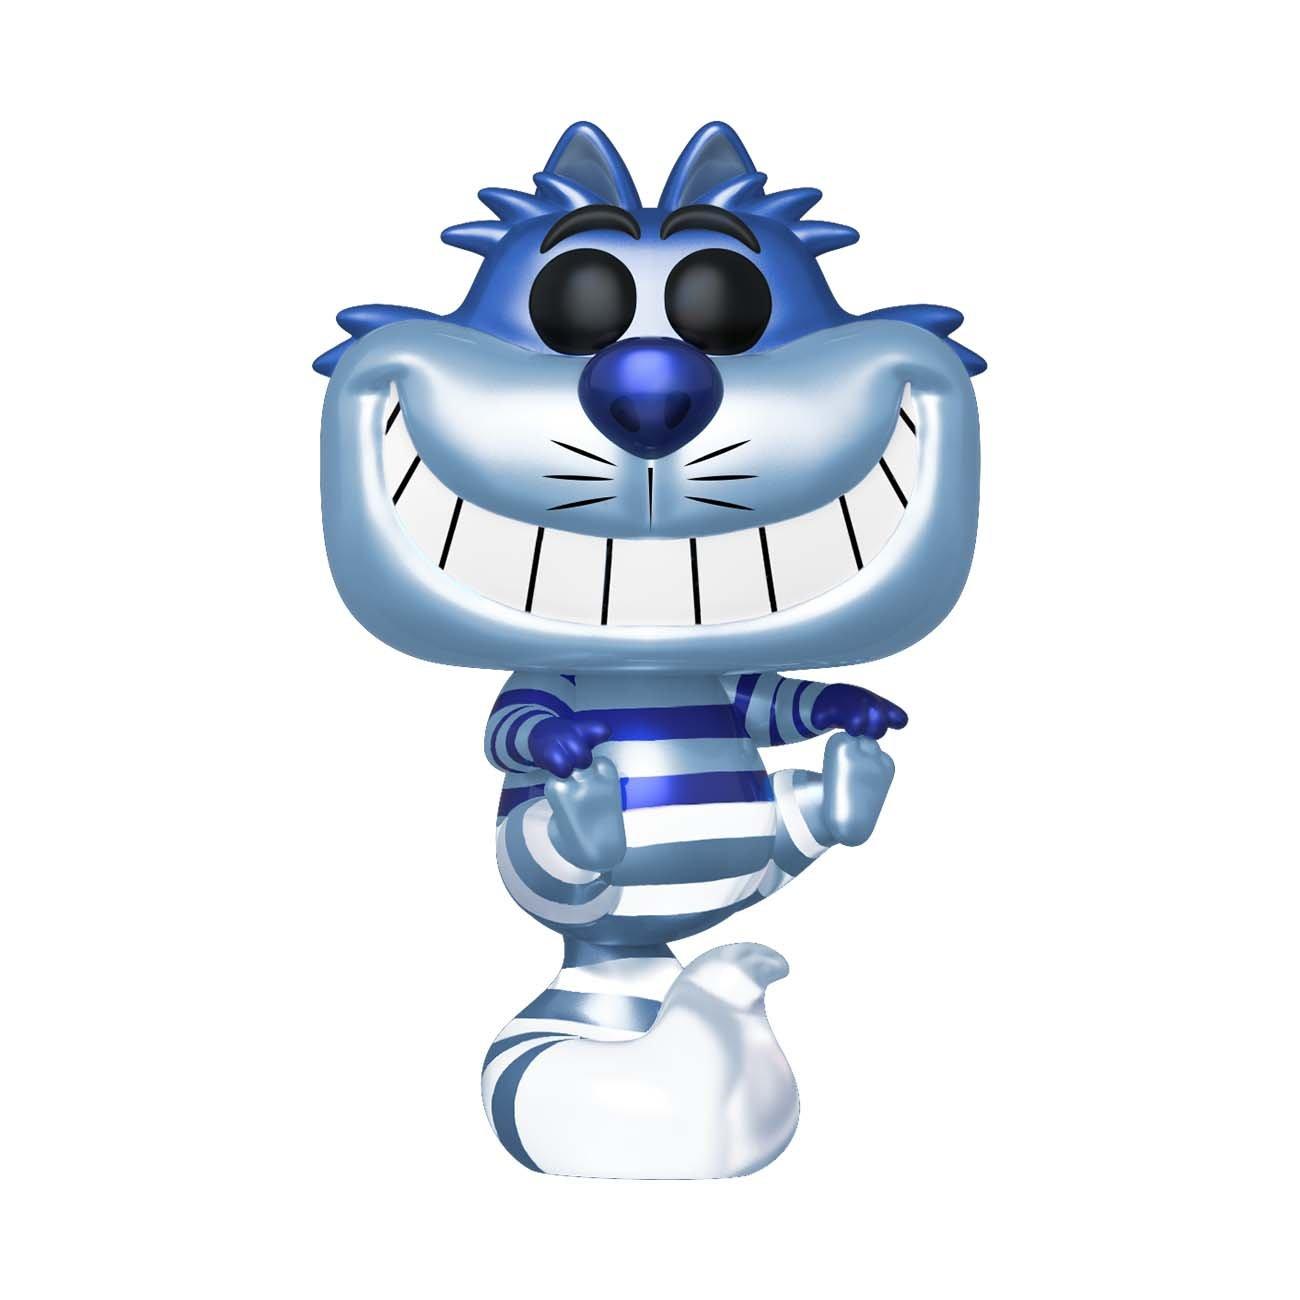 Funko POP! Disney: Make-A-Wish Cheshire Cat Vinyl Figure